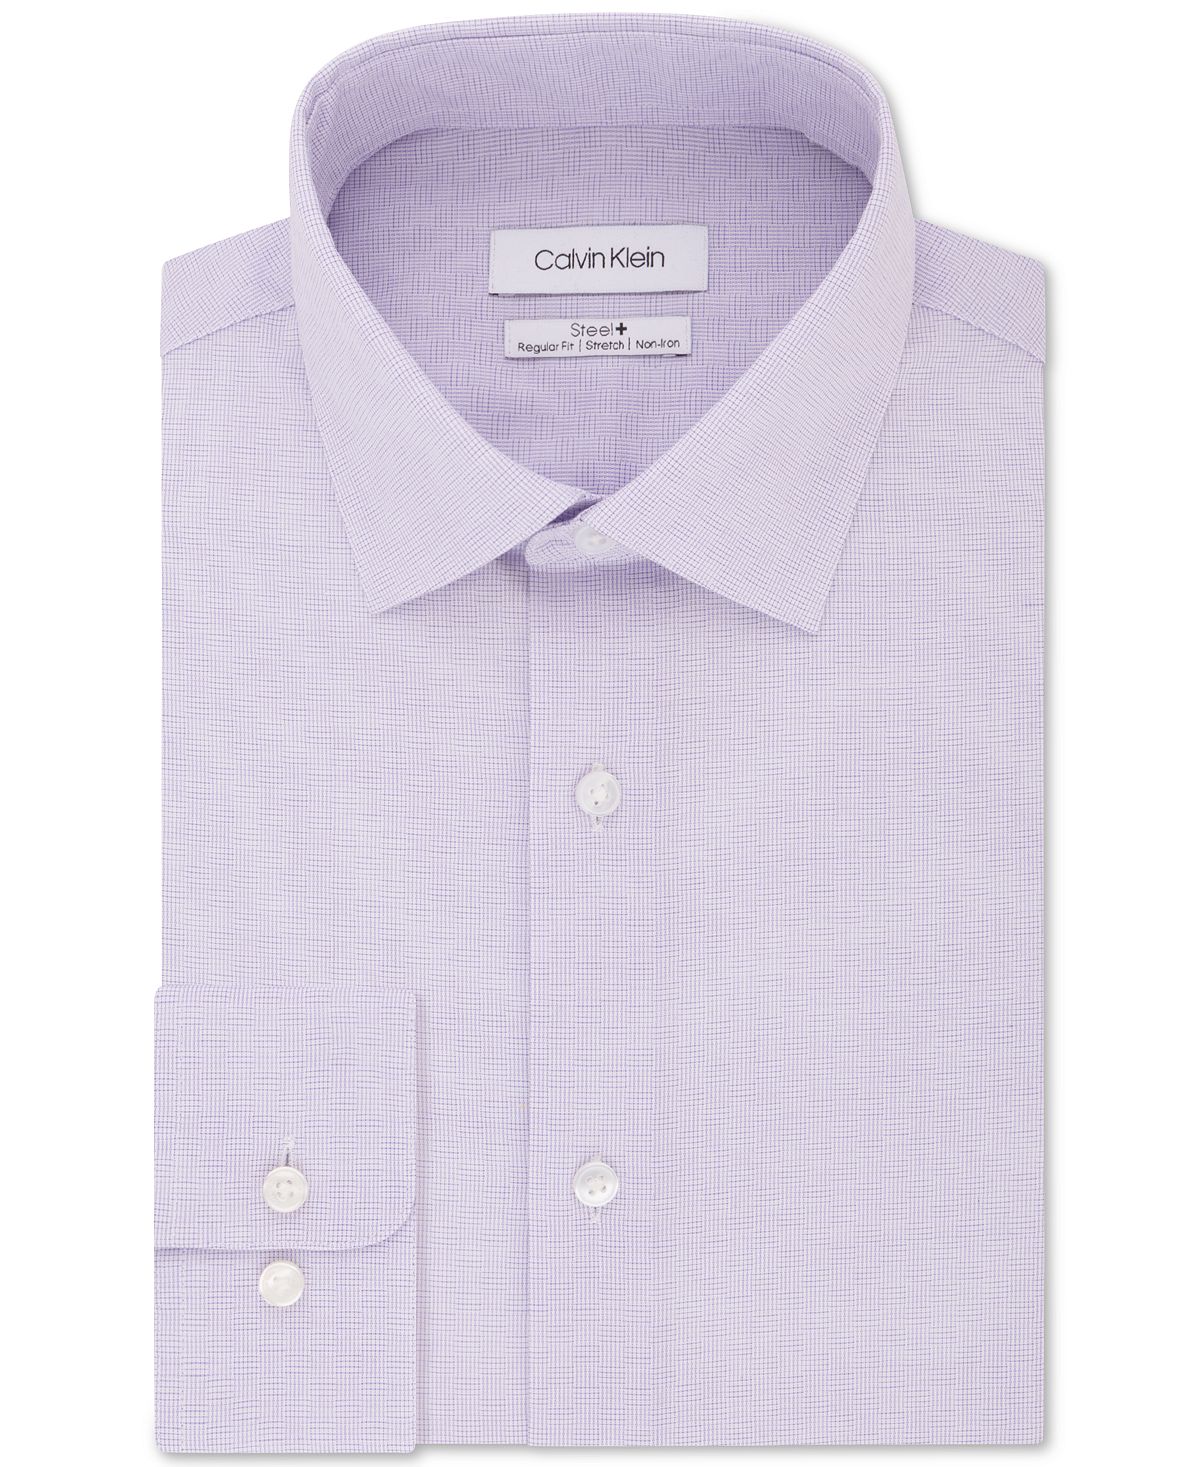 Calvin Klein Steel Classic/regular-fit Stretch Performance Non-iron Purple Check Dress Shirt Lilac